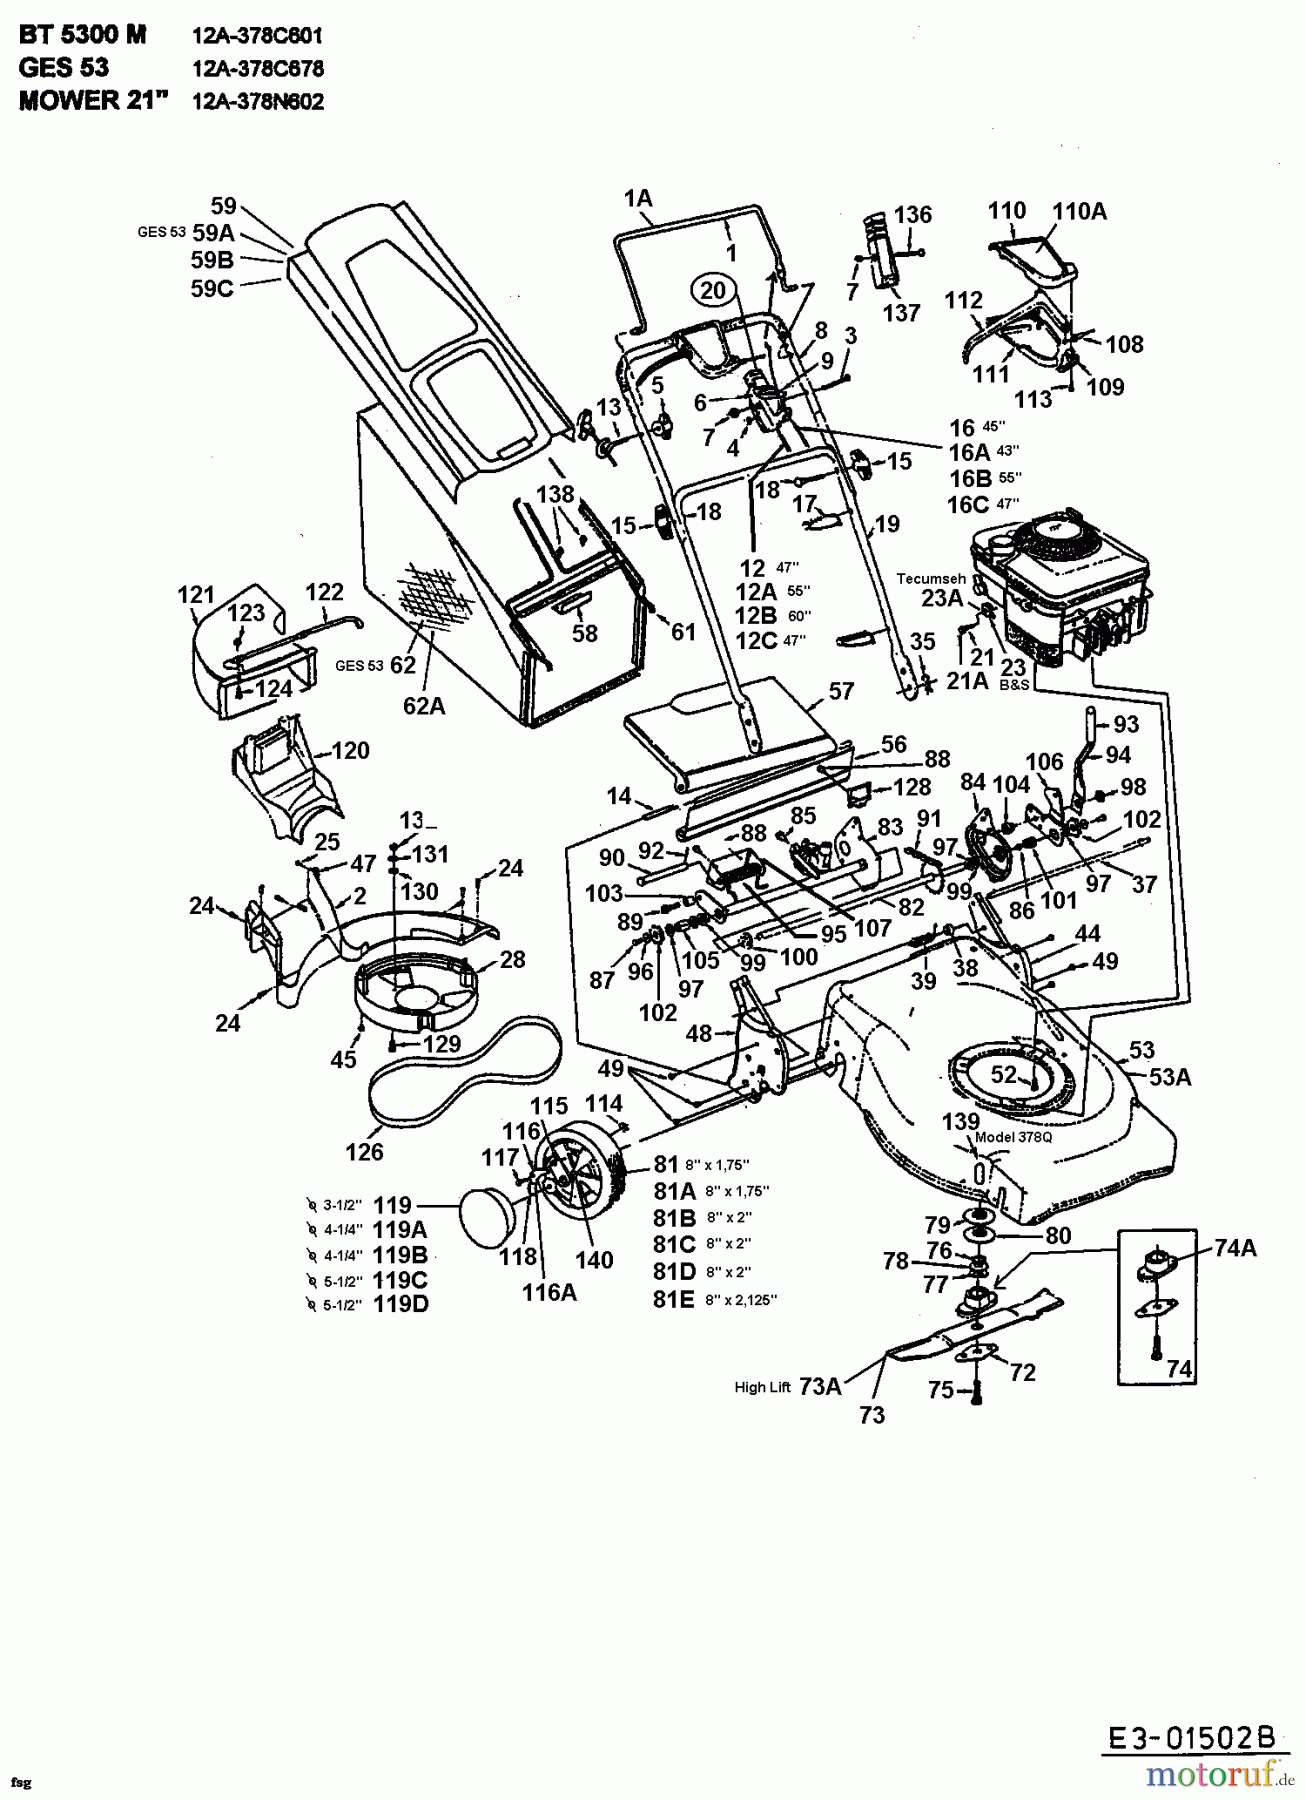  MTD Petrol mower self propelled GES 53 12A-378C678  (1998) Basic machine